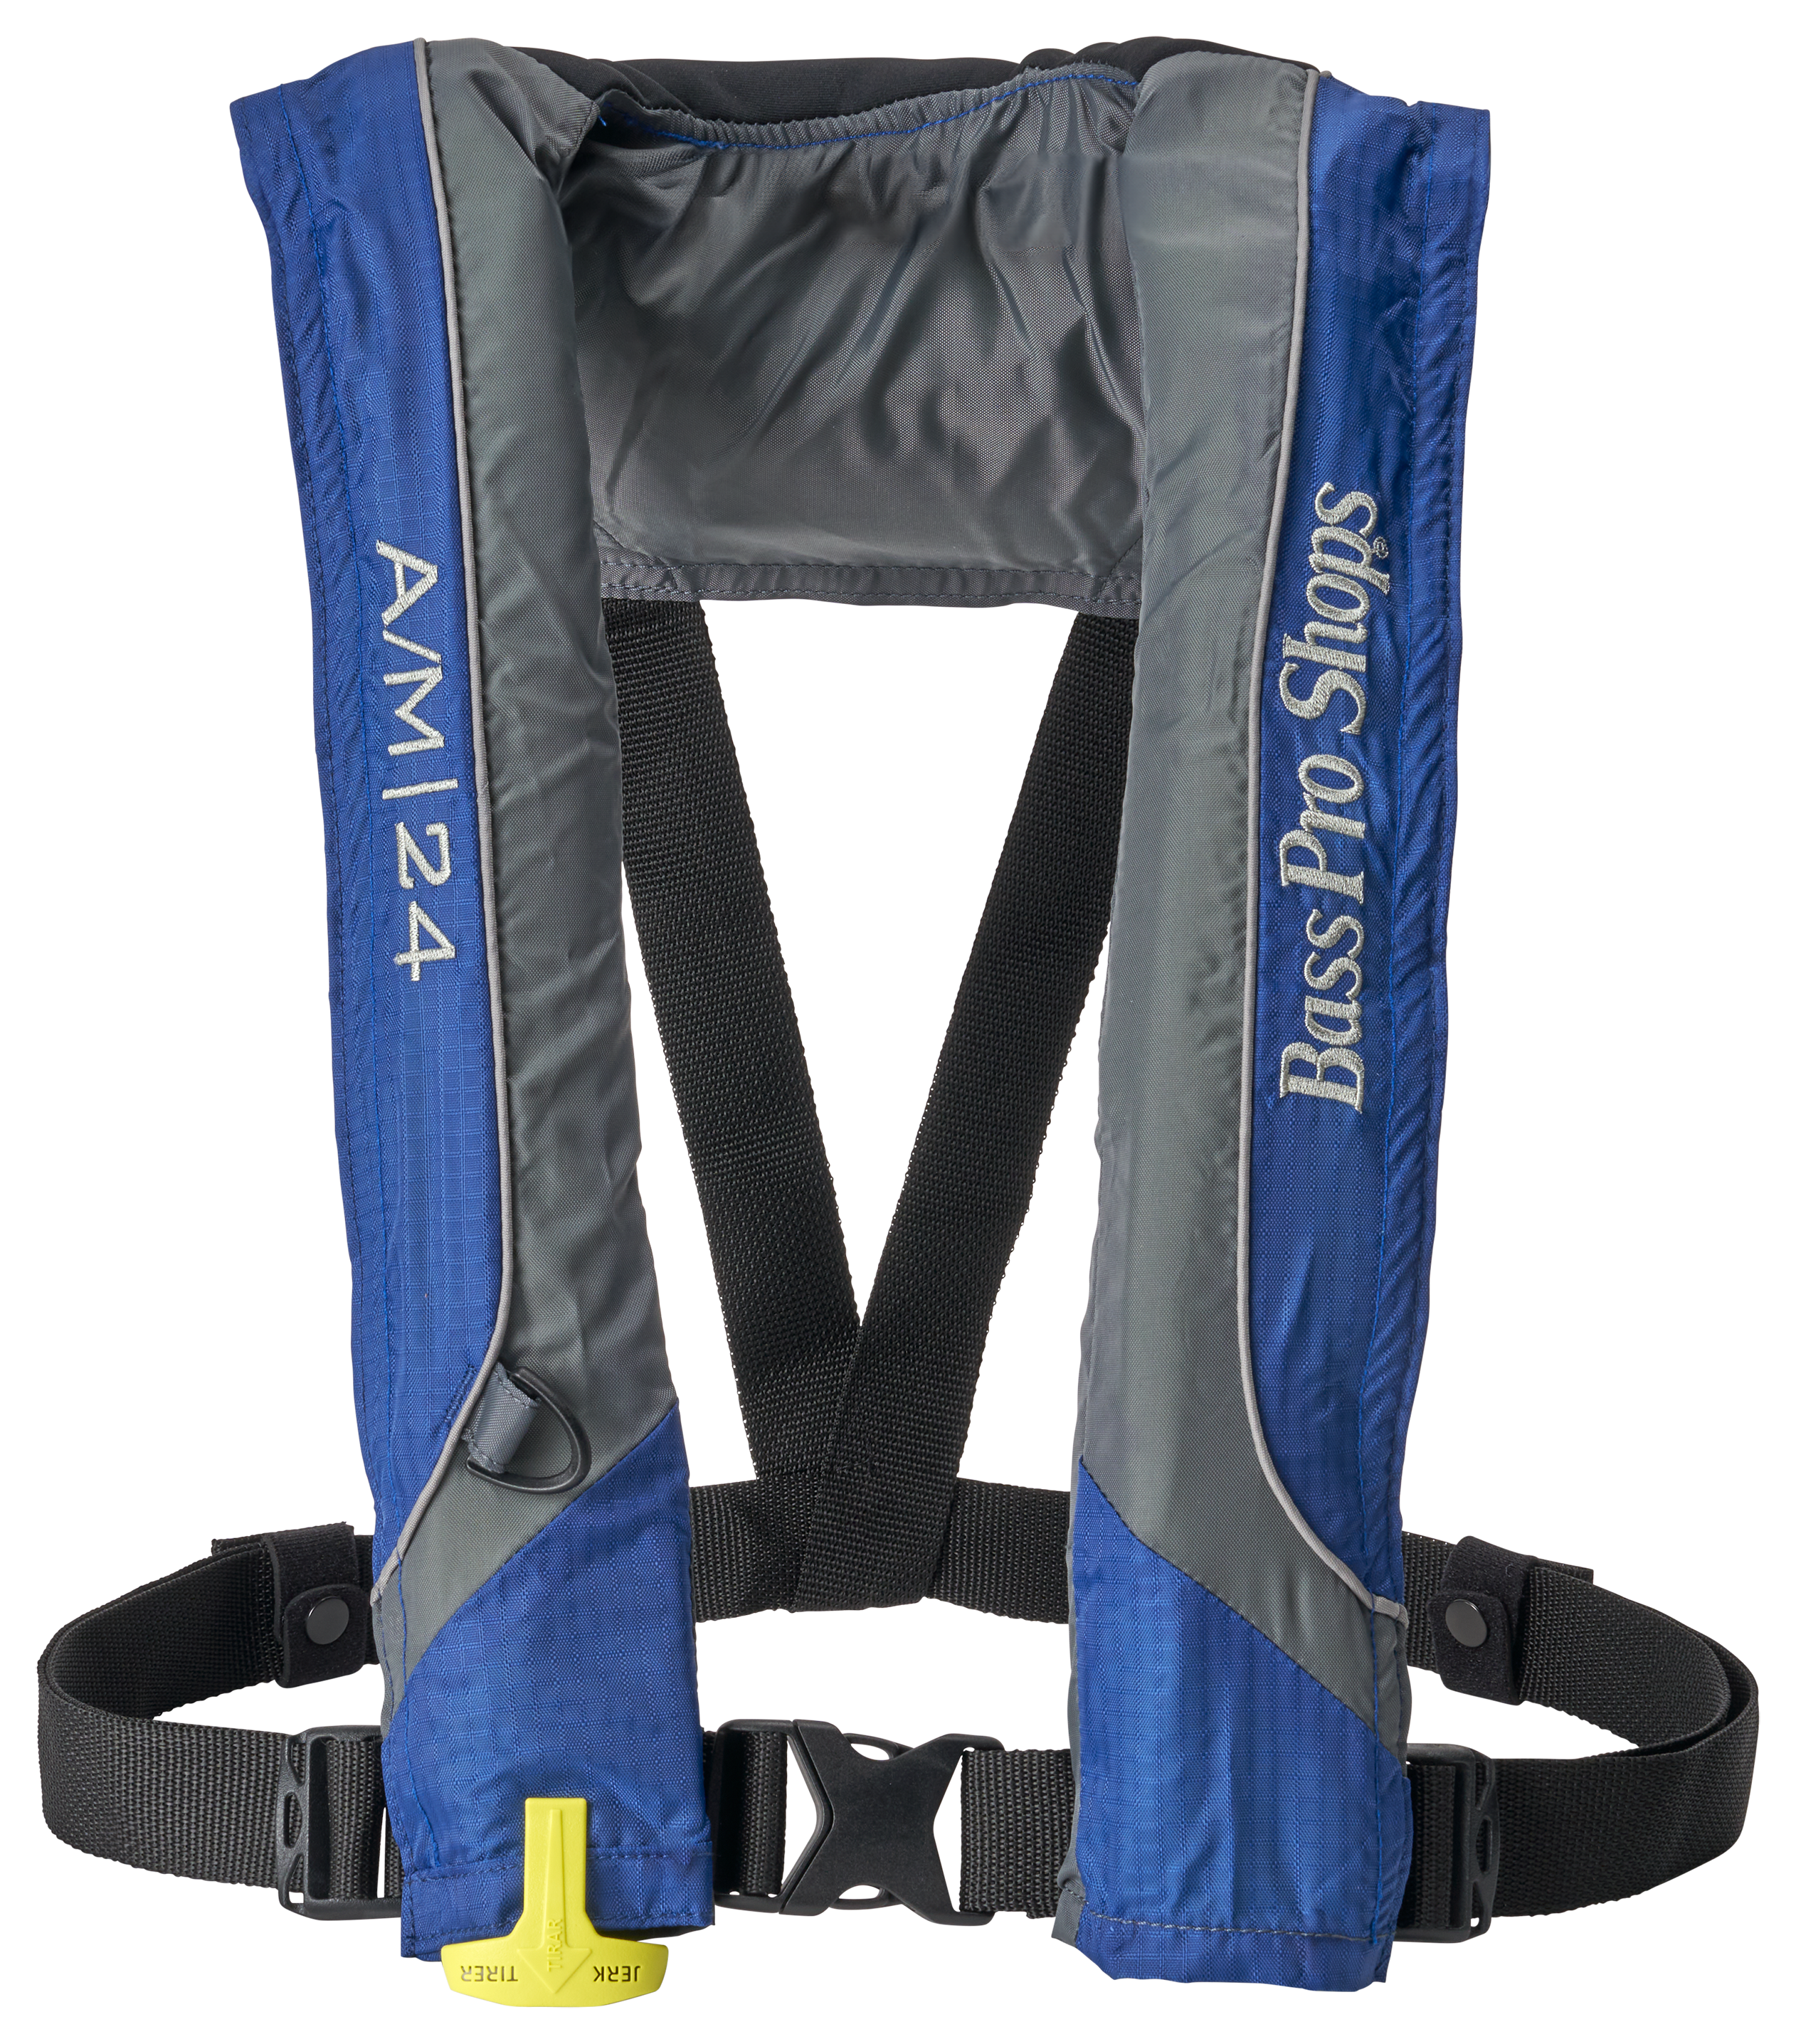 Bass Pro Shops AM24 Auto/Manual Inflatable Life Vest - Blue/Grey